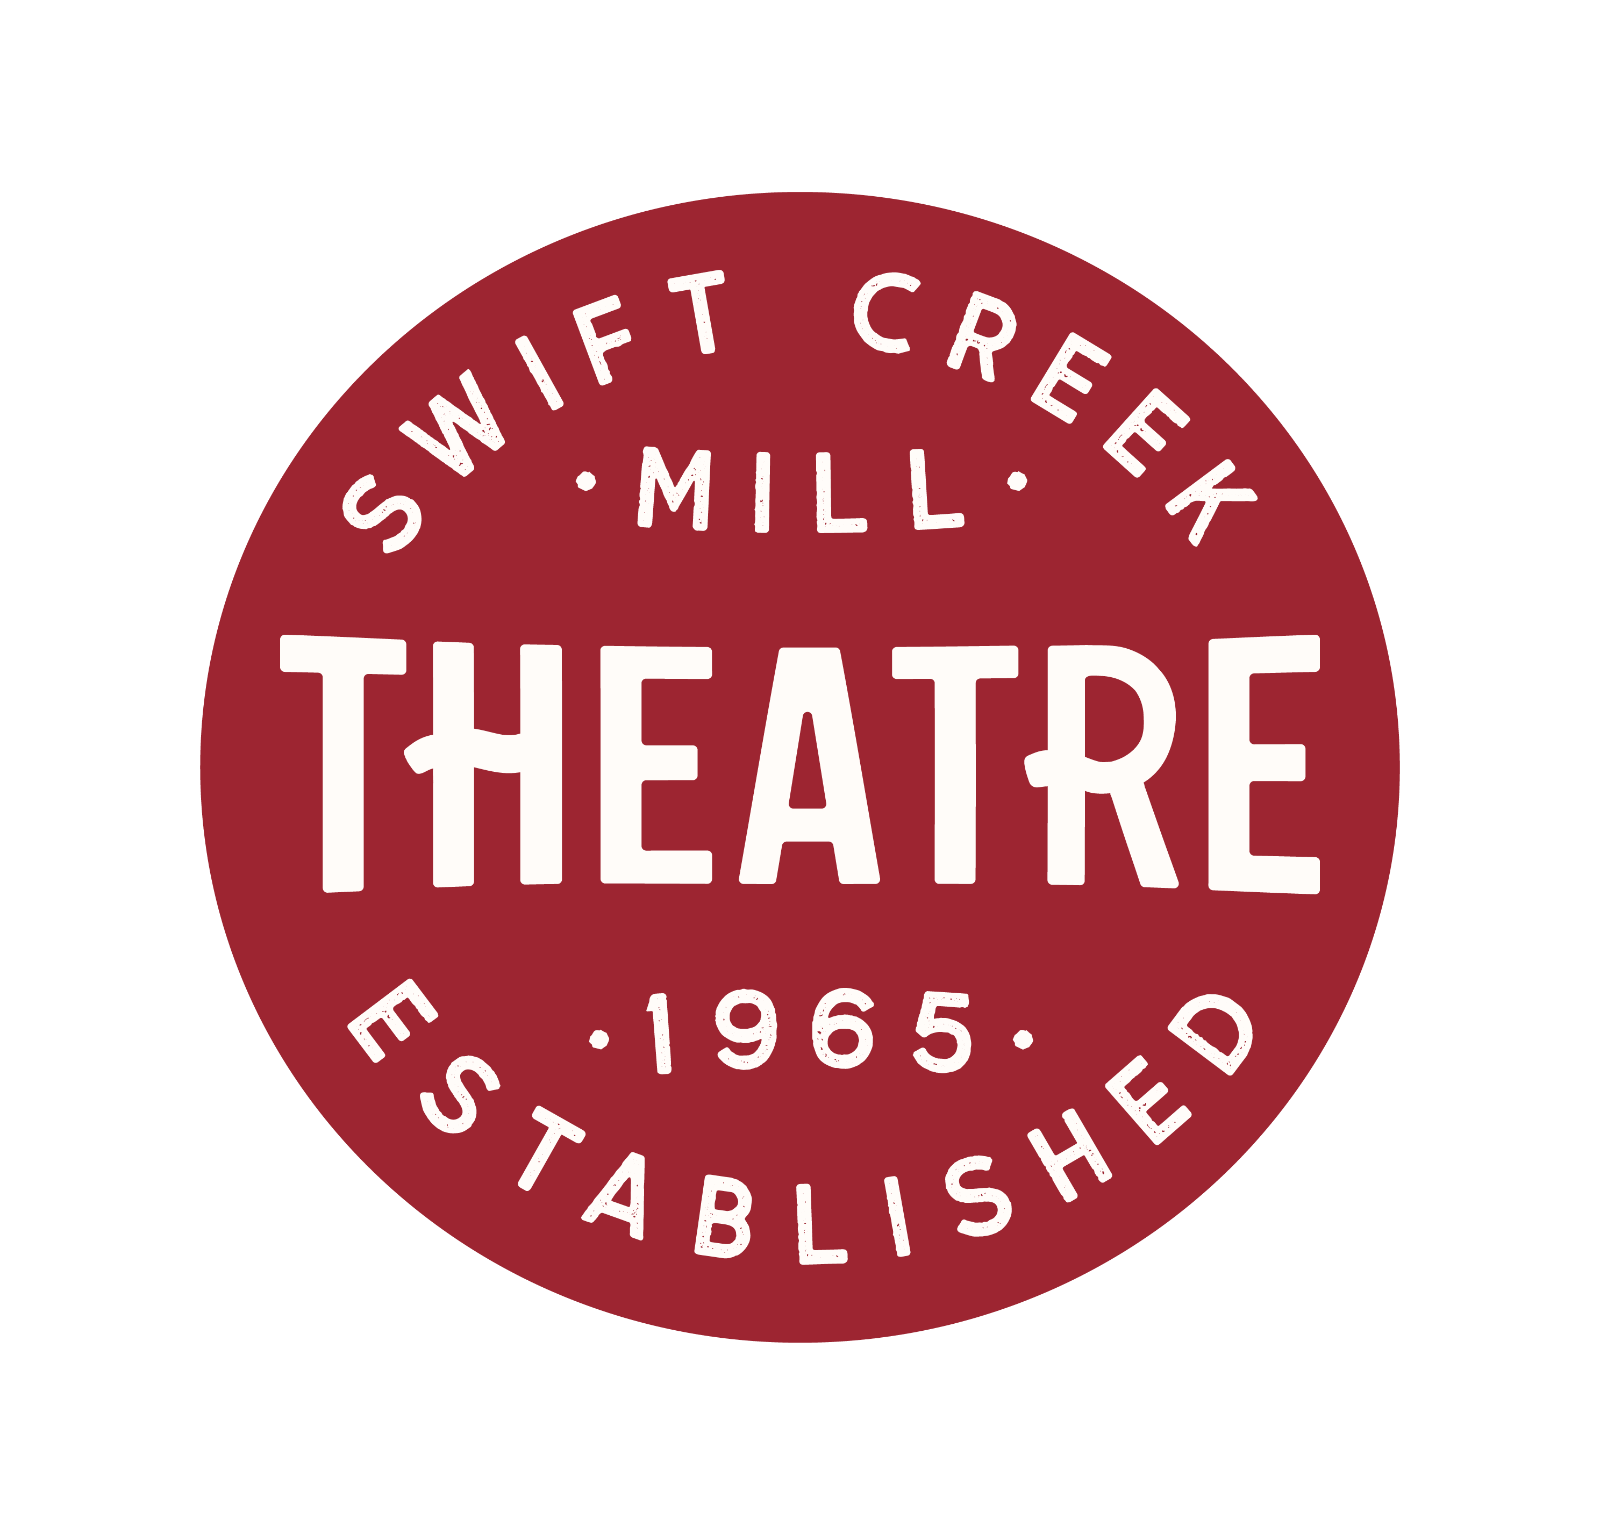 Swift Creek Mill Theatre Established 1965 Circular Logo